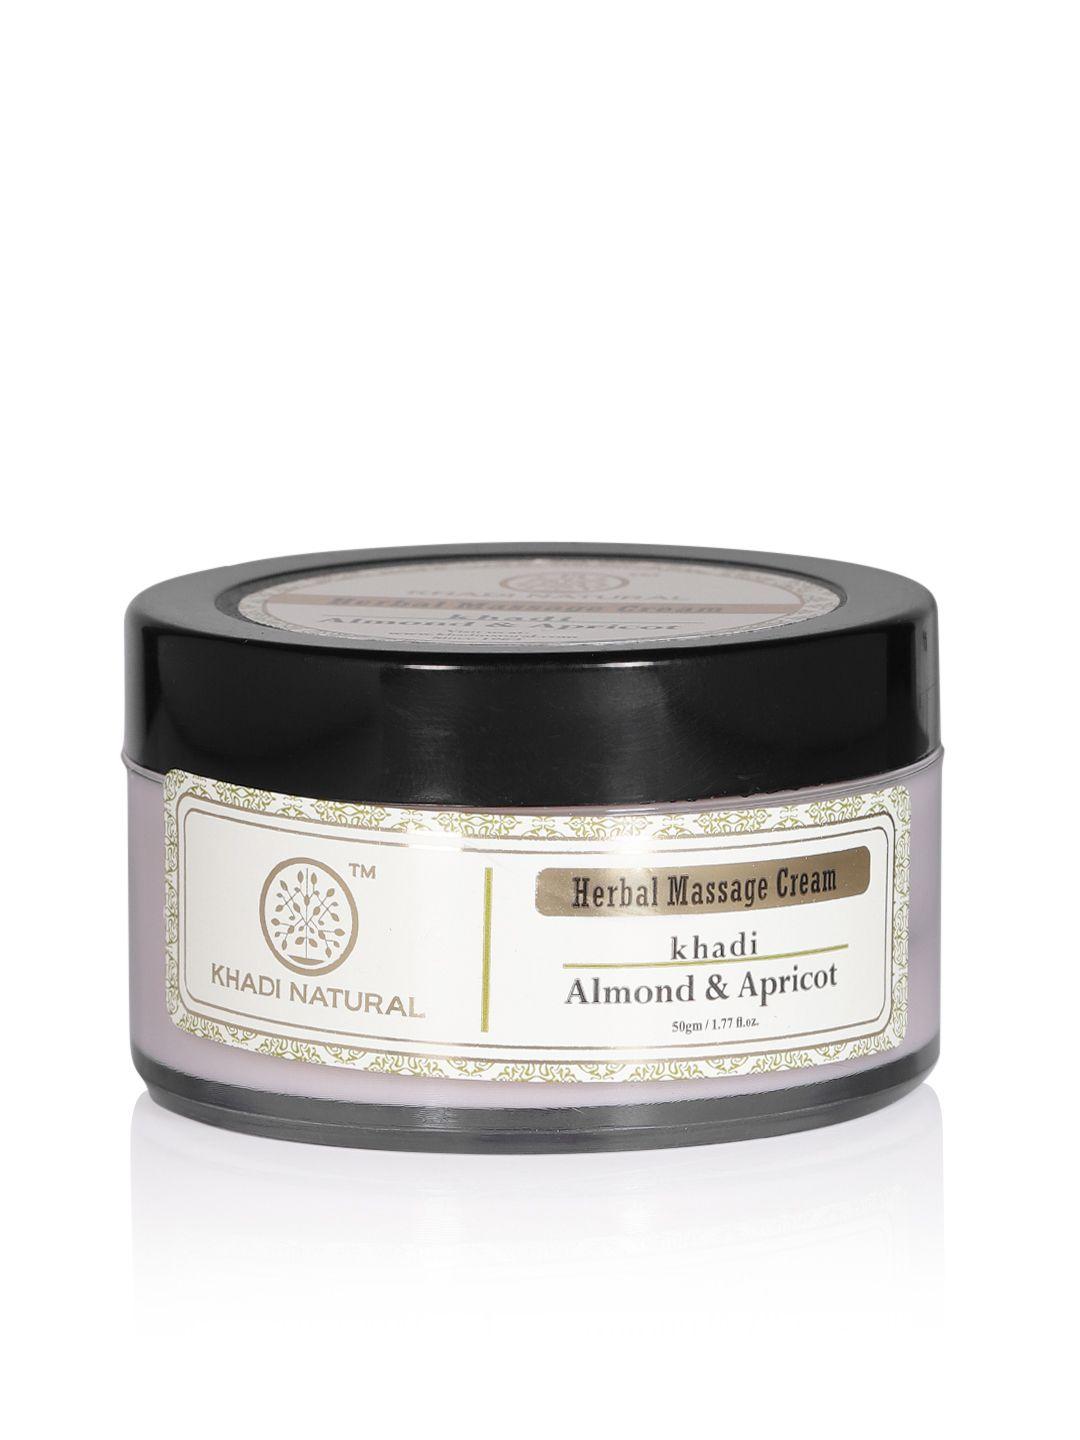 khadi-natural-almond-&-apricot-sustainable-massage-cream-50-g